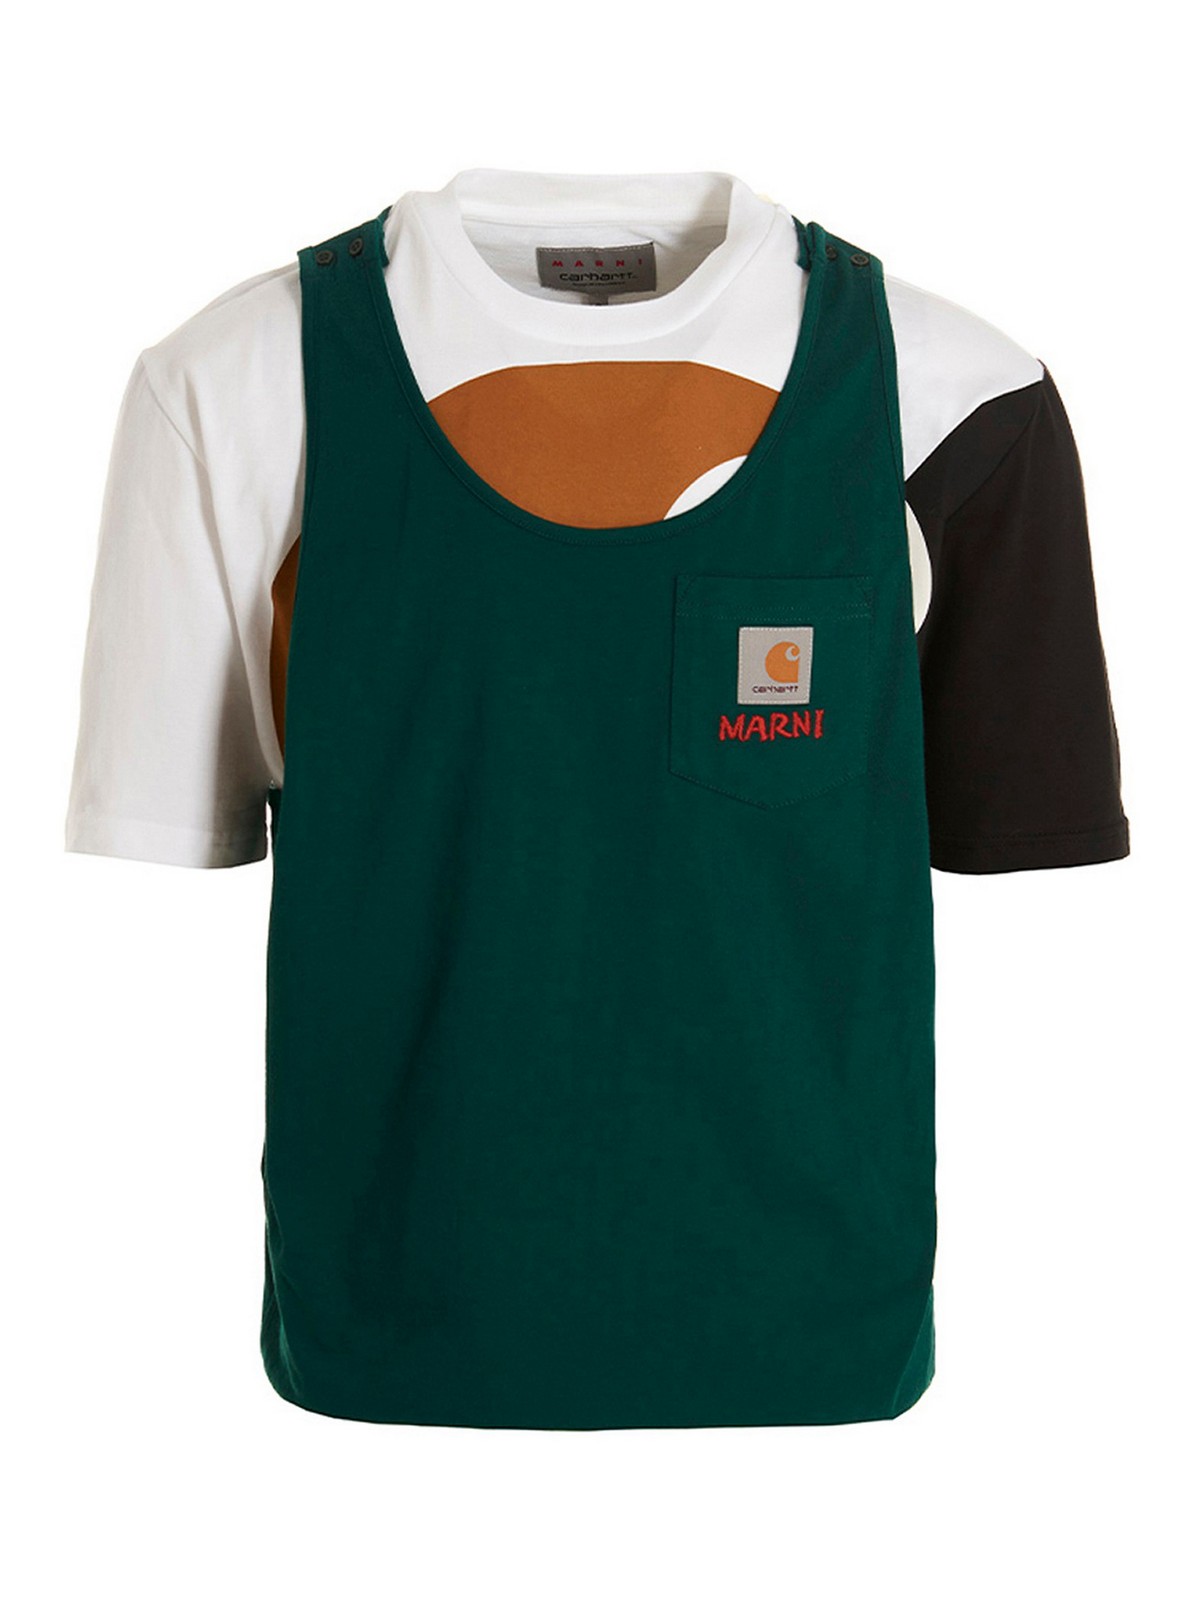 Marni X Carhartt T-shirt In Multicolour